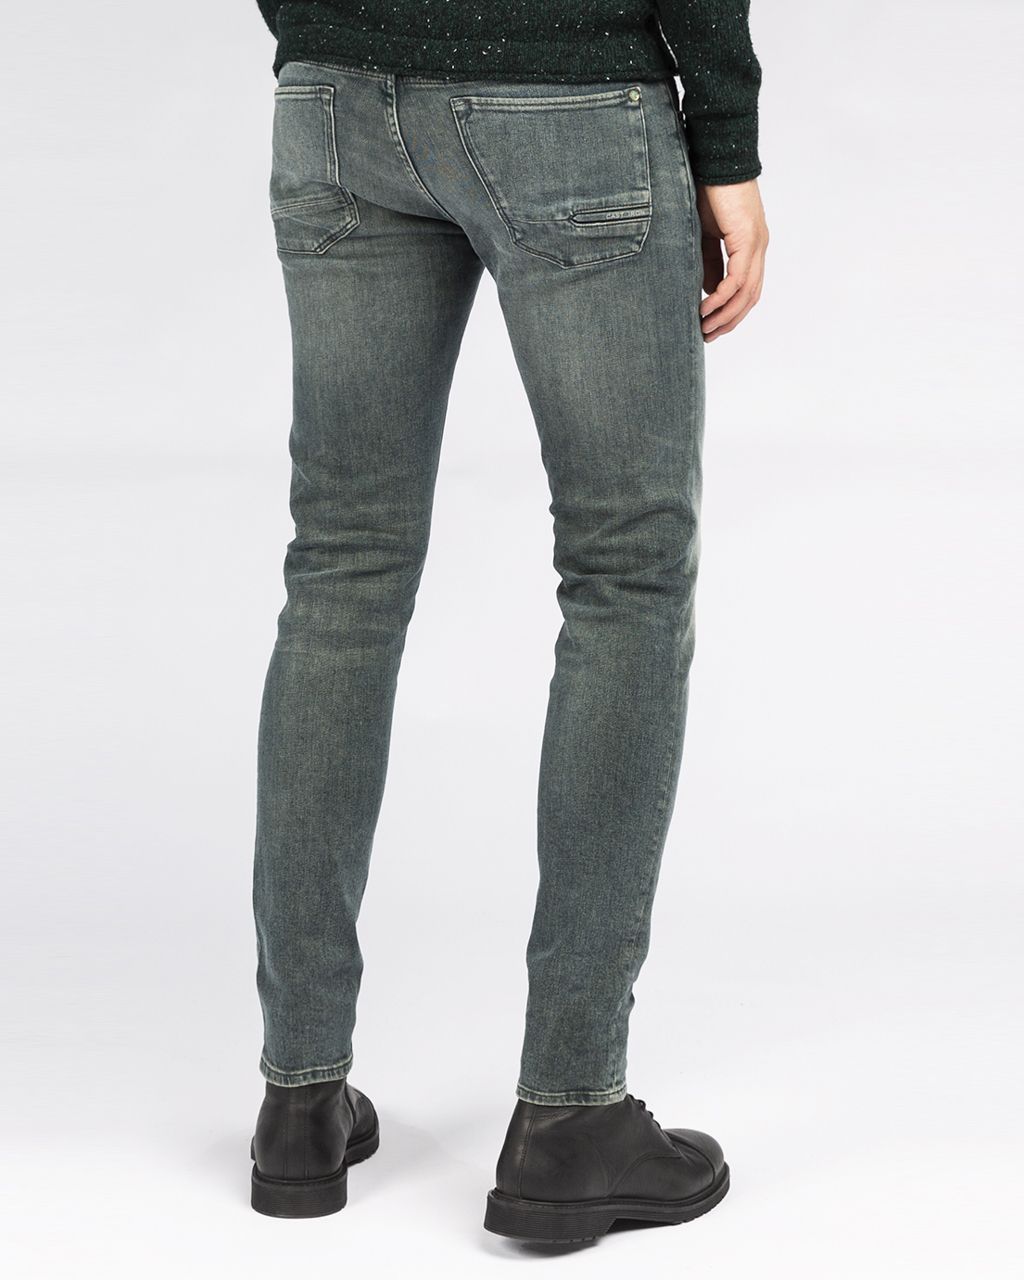 Cast Iron Riser Slim Fit Comfort Jeans | Shop nu - Only for Men